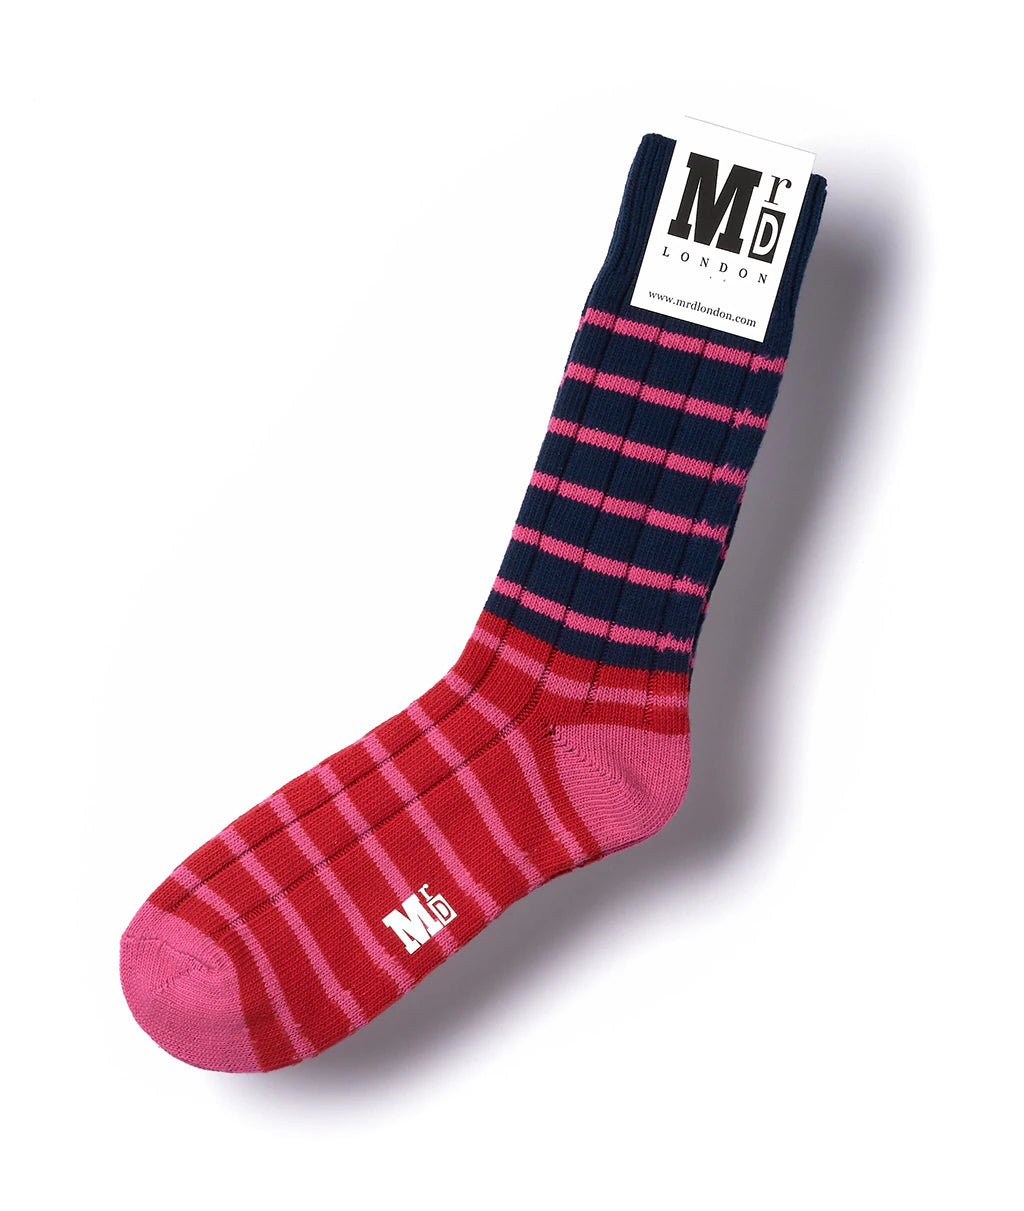 MrD London Breton Striped Rib Sock - Navy/Pink